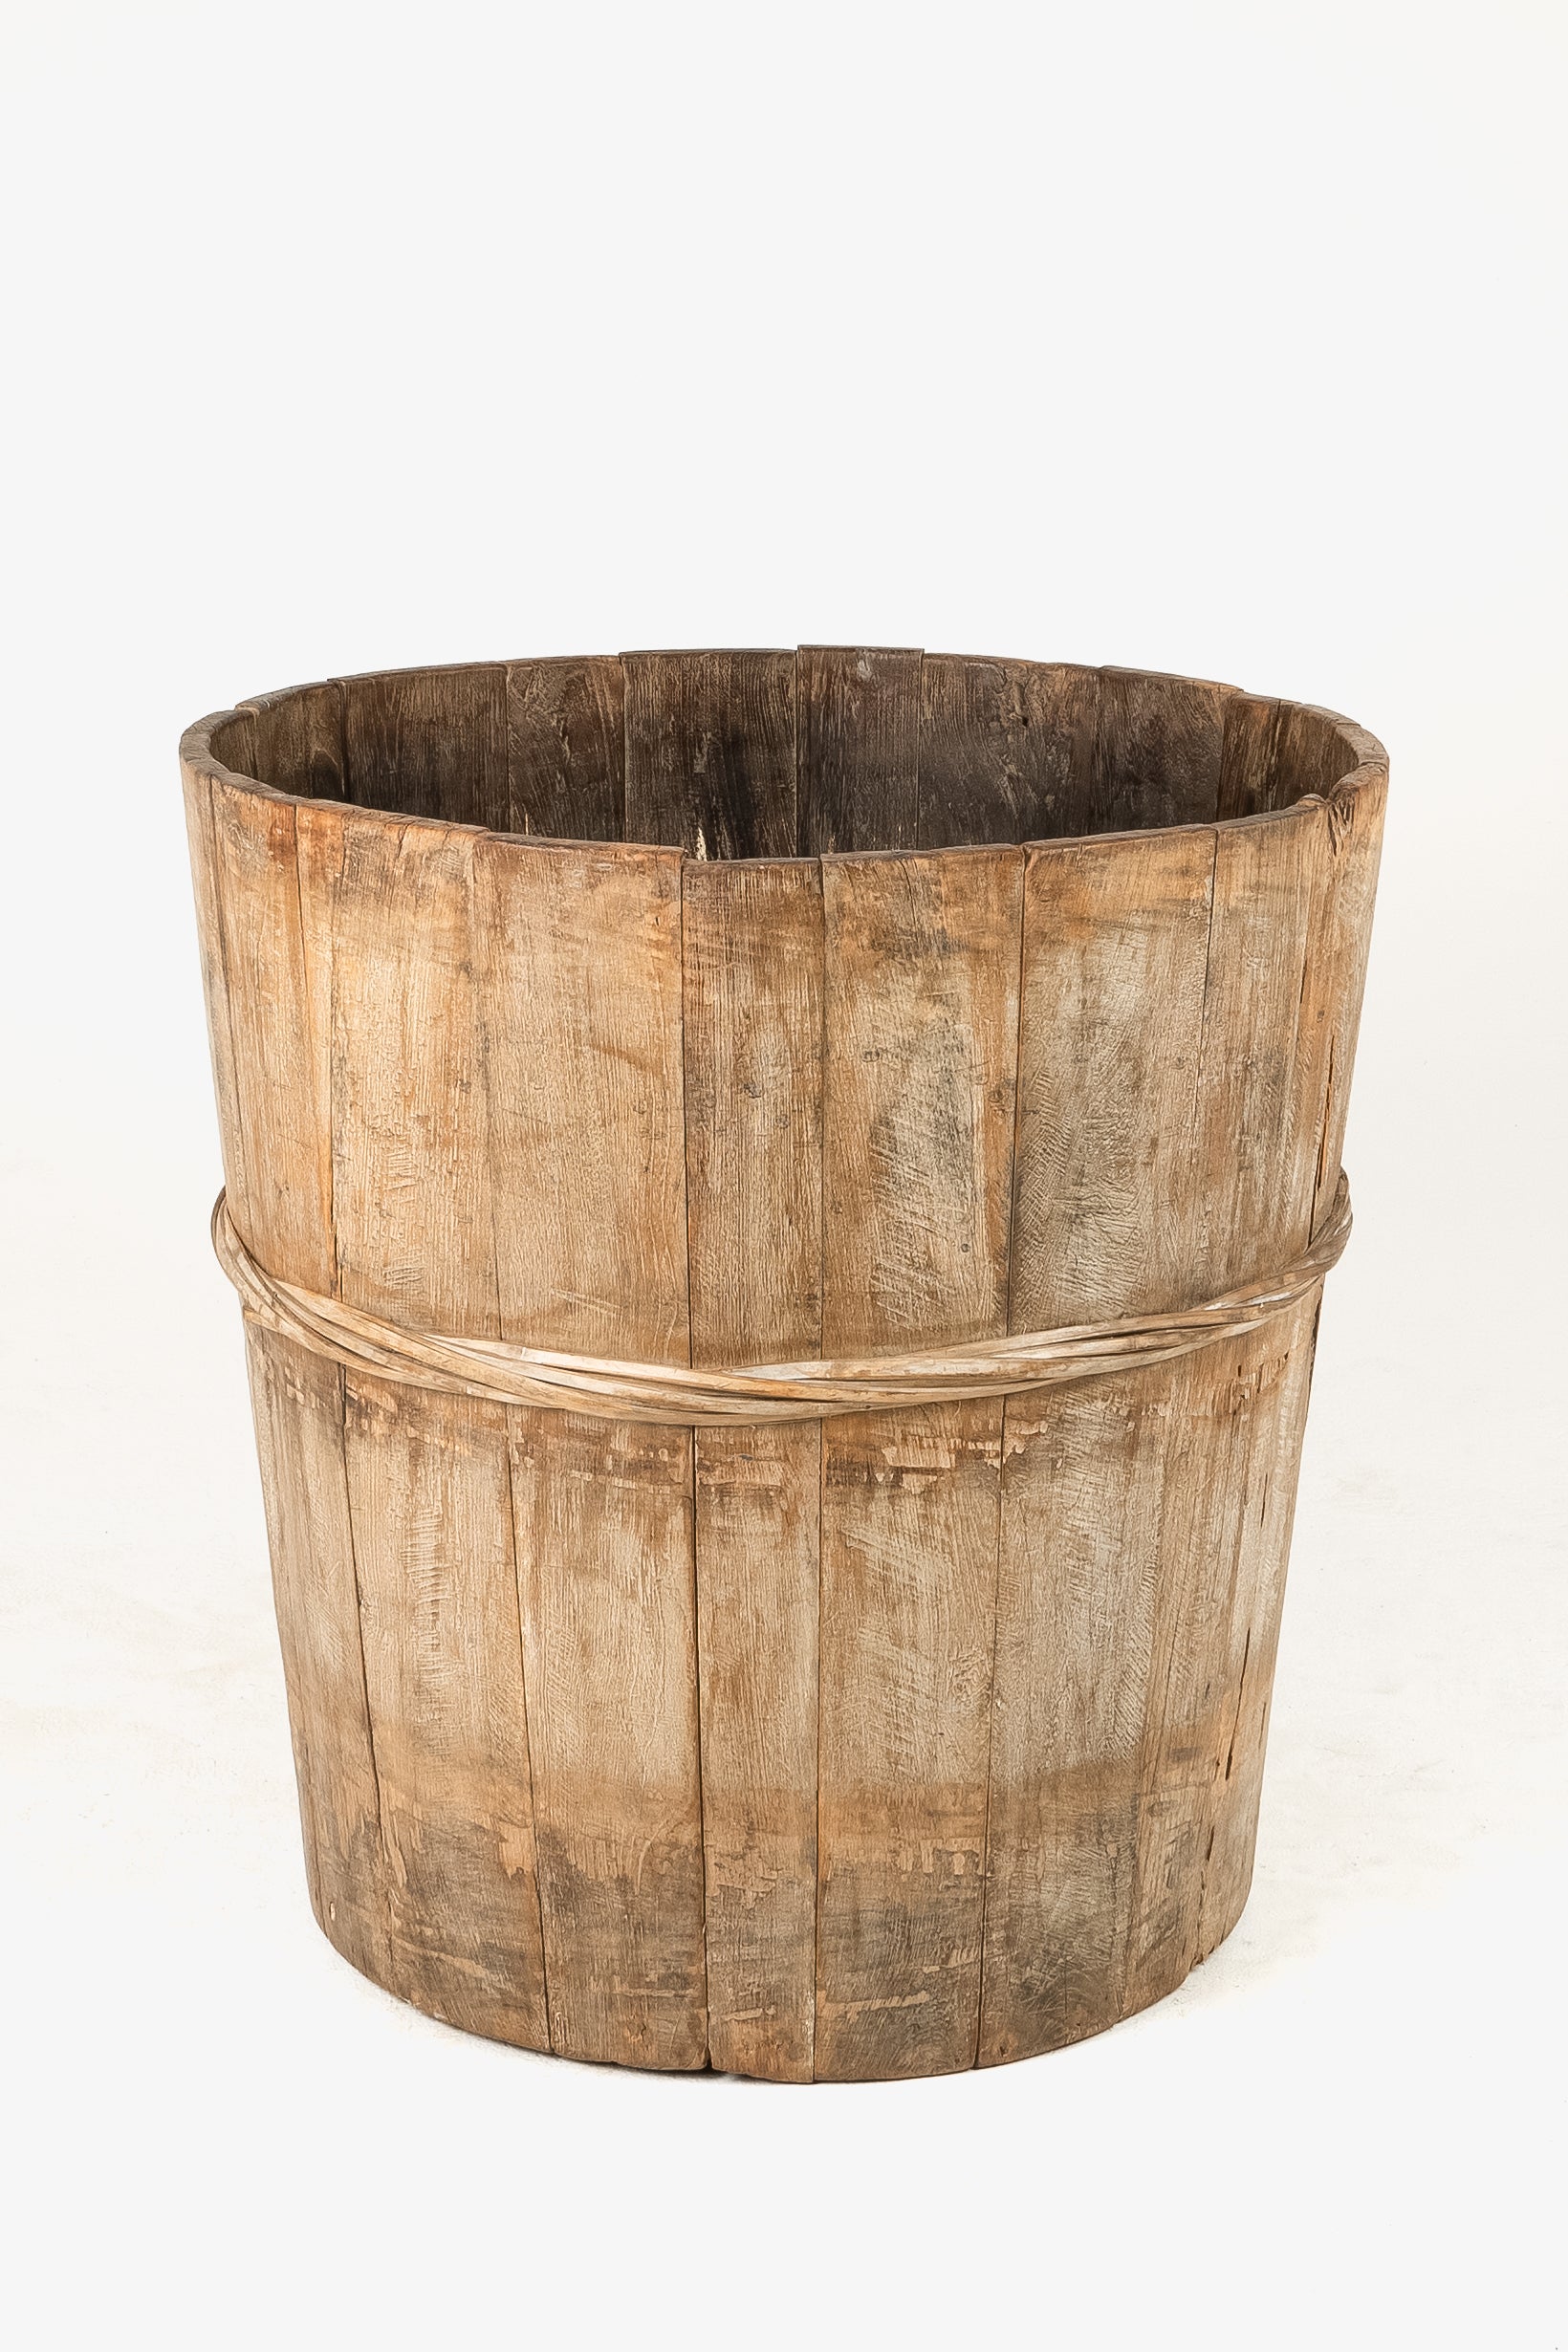 Barrel Planter Pot by